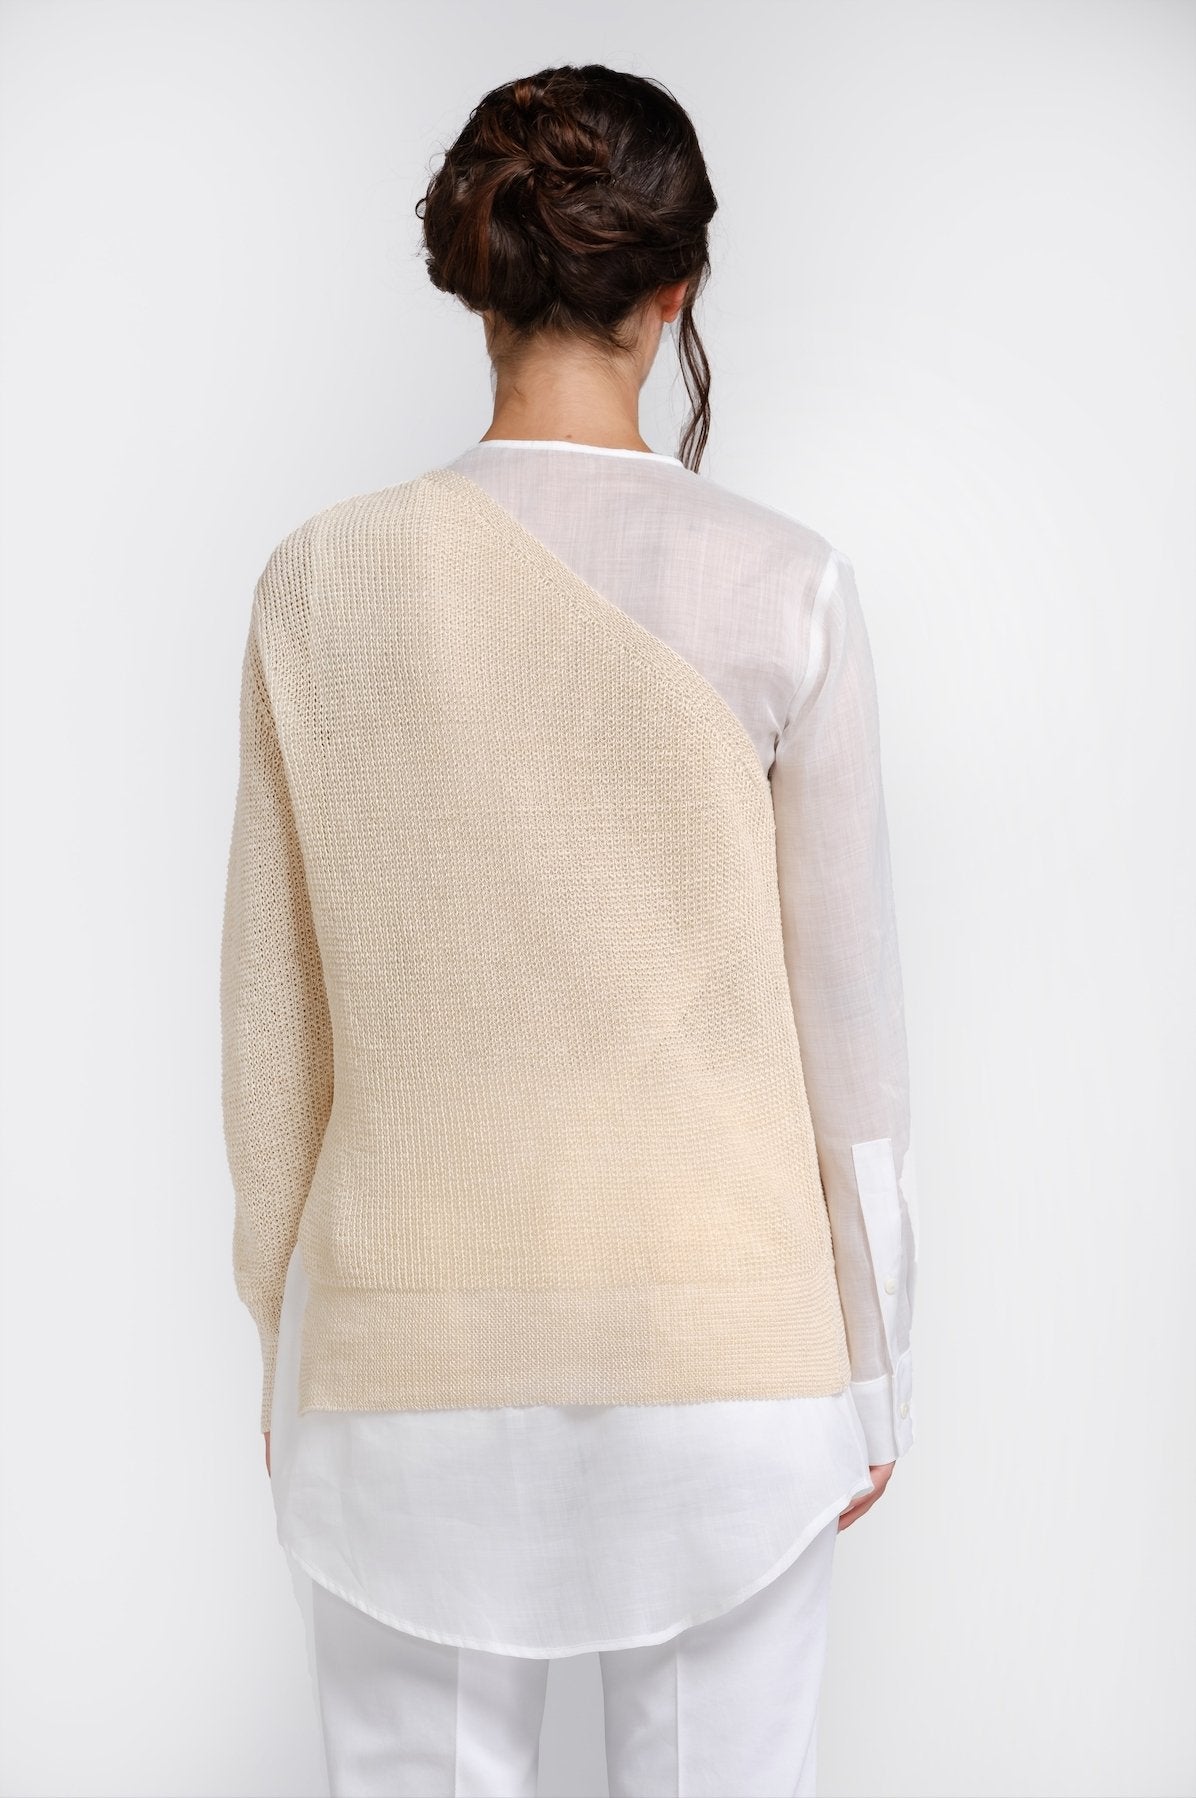 Natural hemp sweater shirt - The Clothing LoungeTrame di Stile